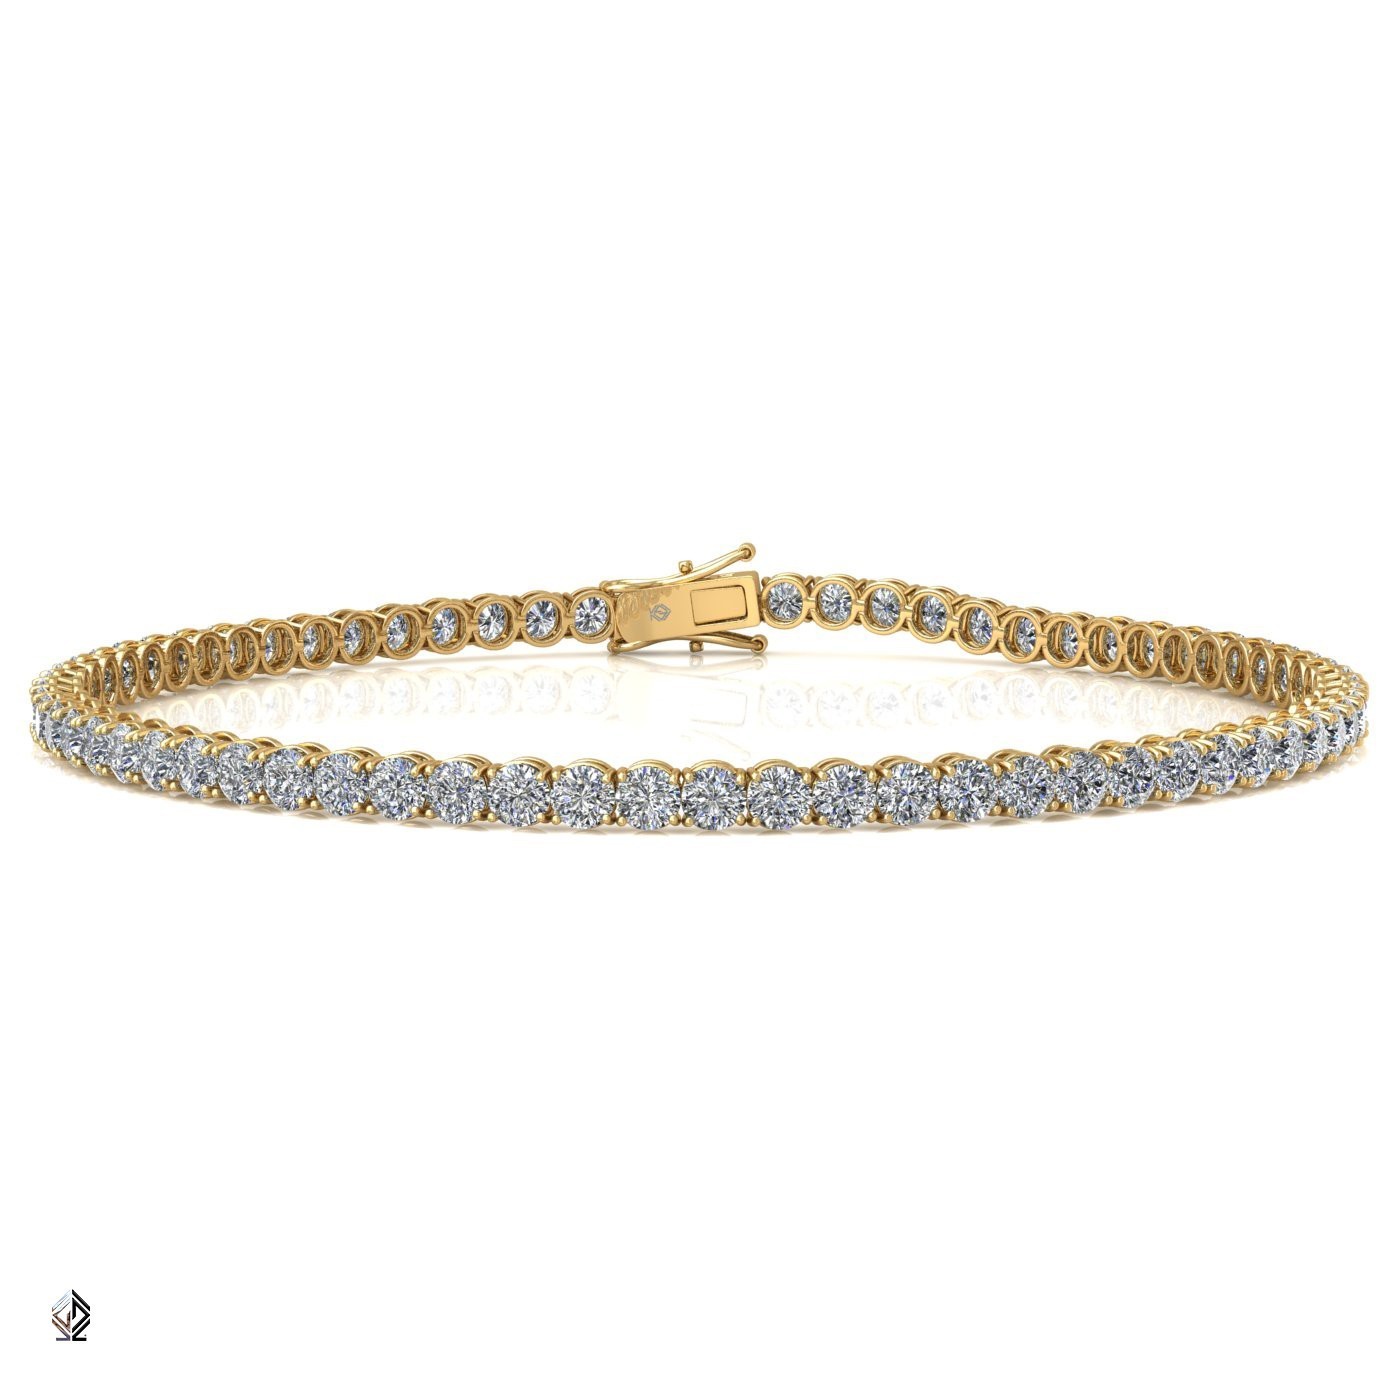 18k yellow gold 2.4mm 4 prong round shape diamond tennis bracelet in round setting